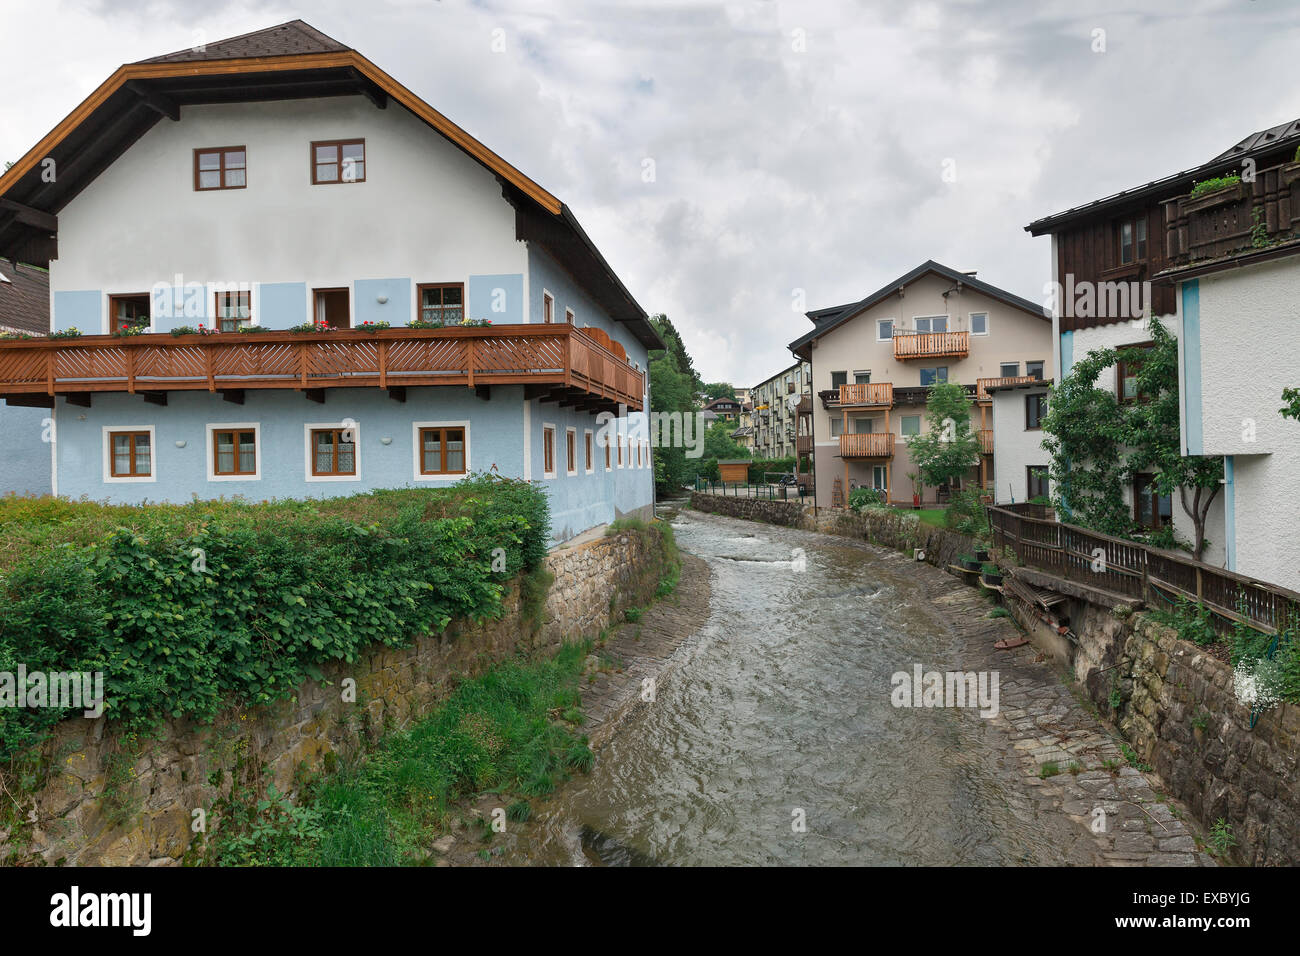 The architecture of the village of Mondsee, Austria Stock Photo